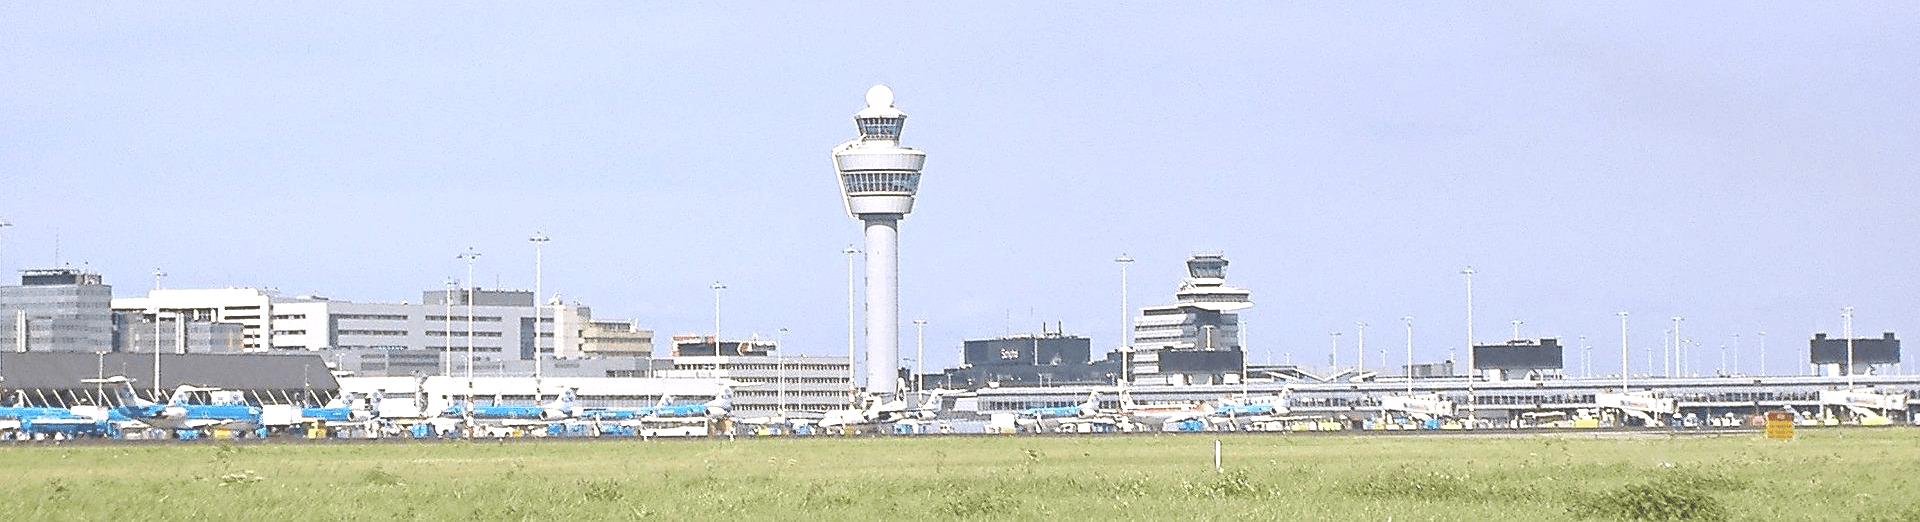 Schiphol_Airport